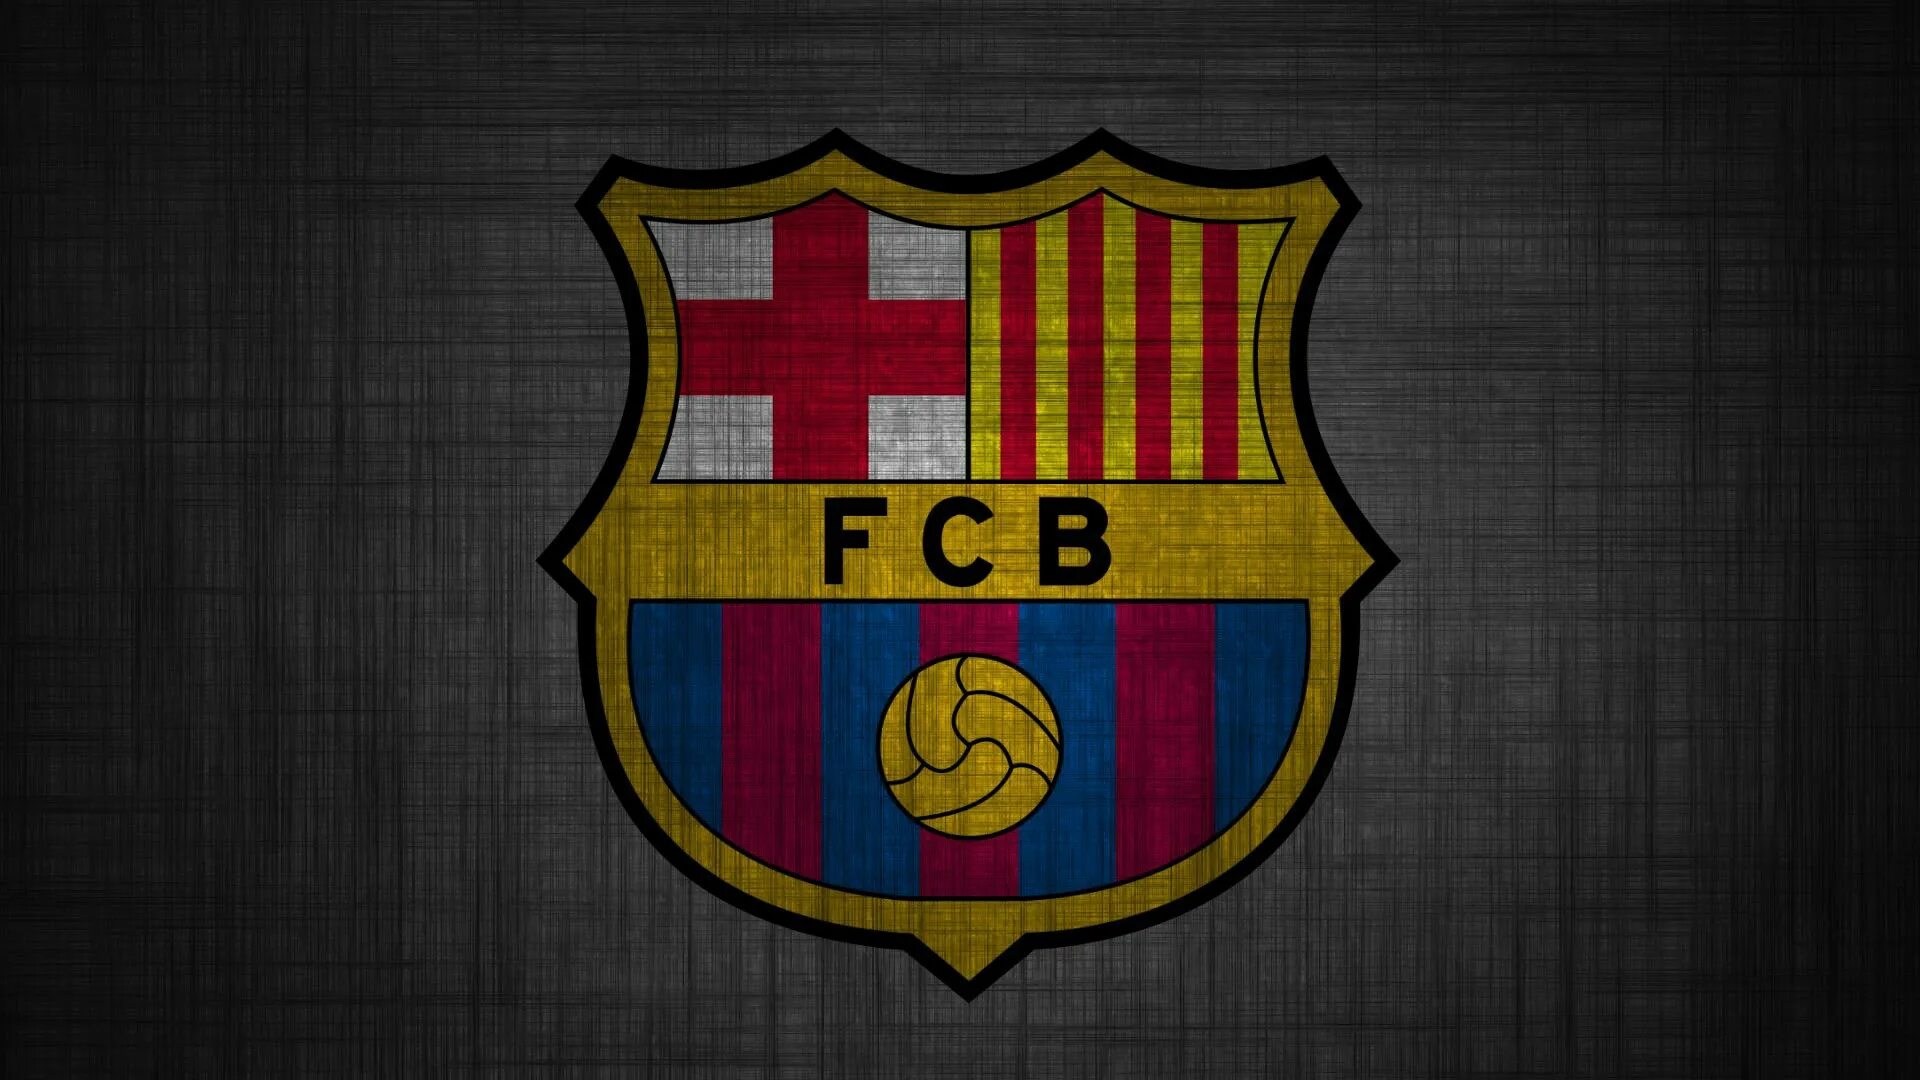 1.4 f c. Барселона ФК. Значок Барселоны. Барселона футбольный клуб лого. Флаг команды Барселона.